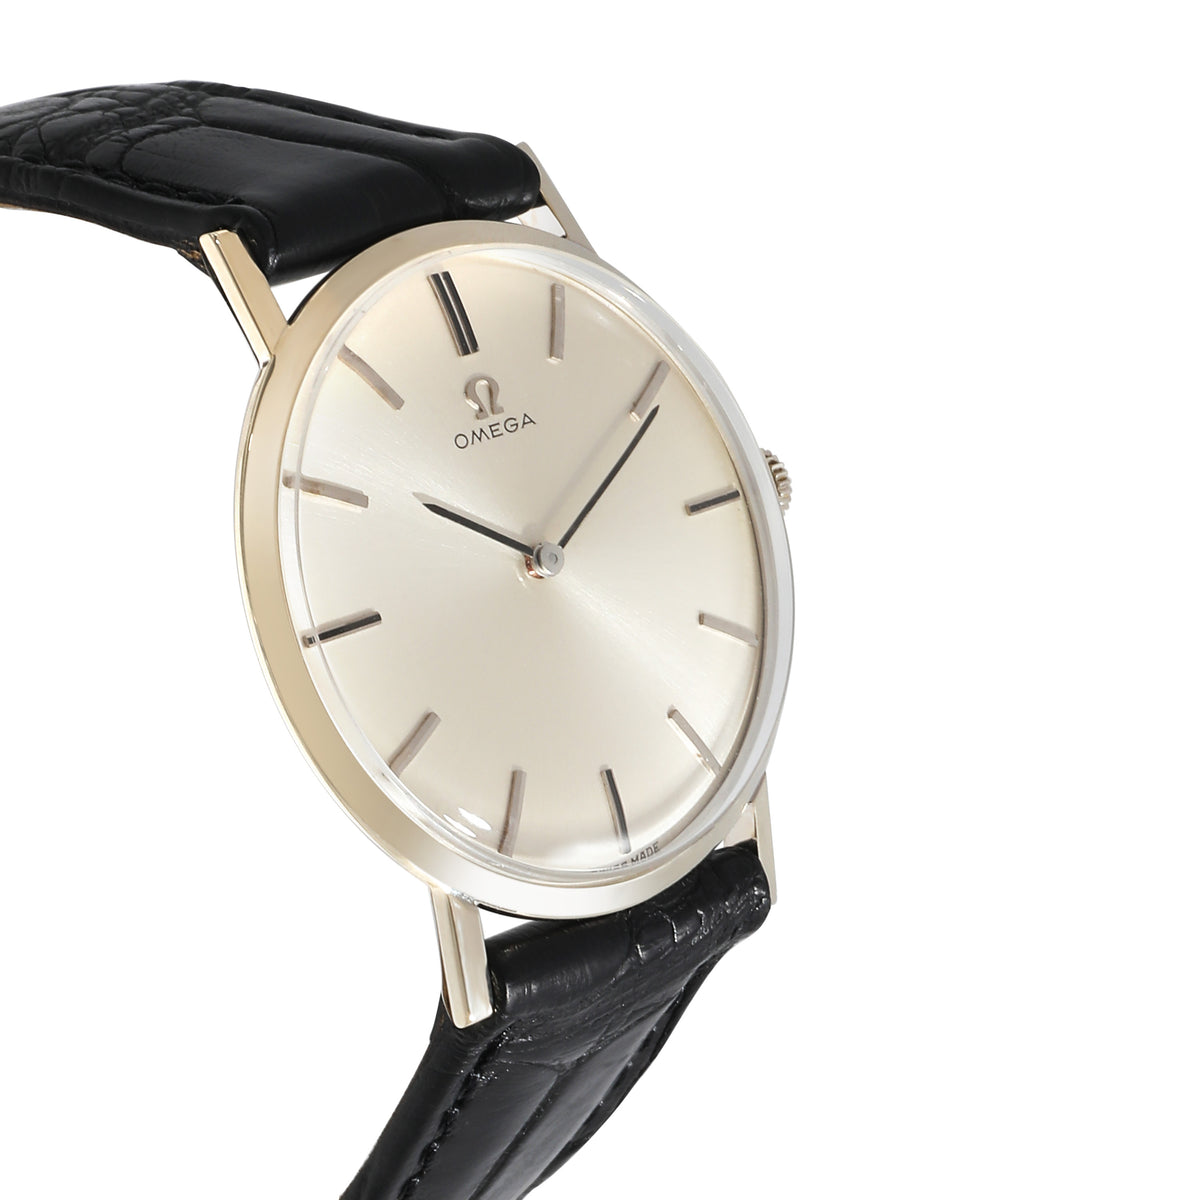 Omega DeVille D6672 Men's Watch in 14kt White Gold